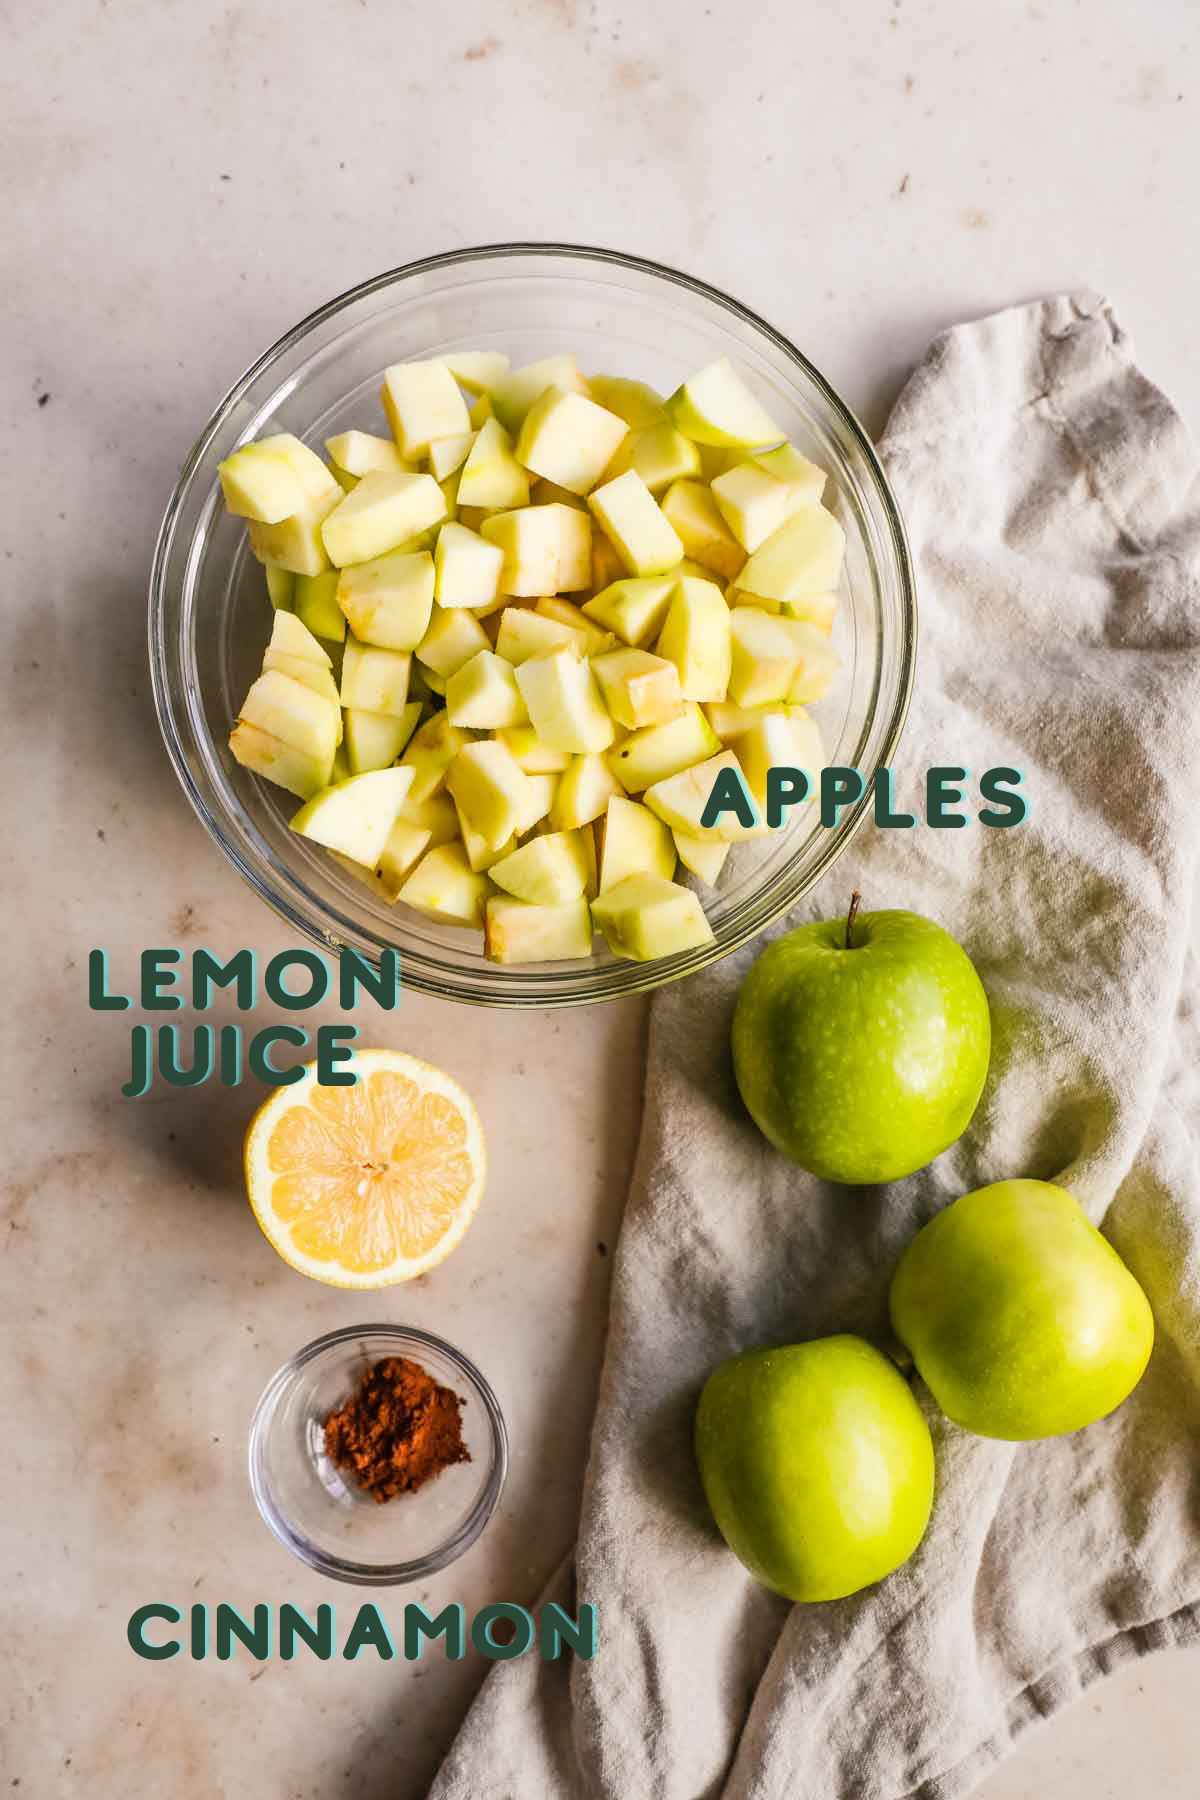 Ingredients to make unsweetened apple sauce, including apples, lemon juice, cinnamon, and water.